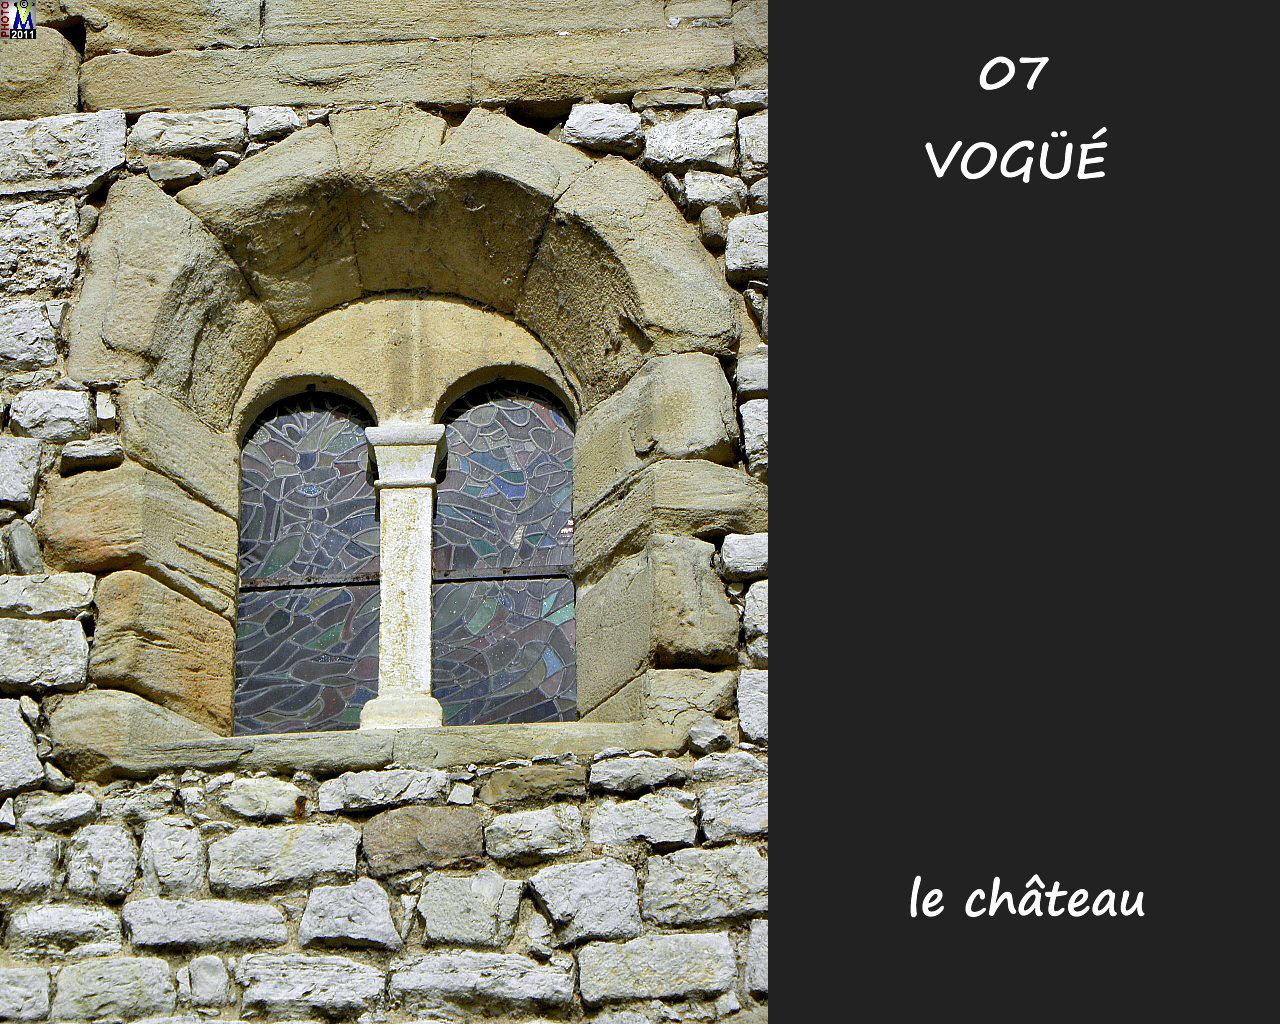 07VOGUE_chateau_124.jpg